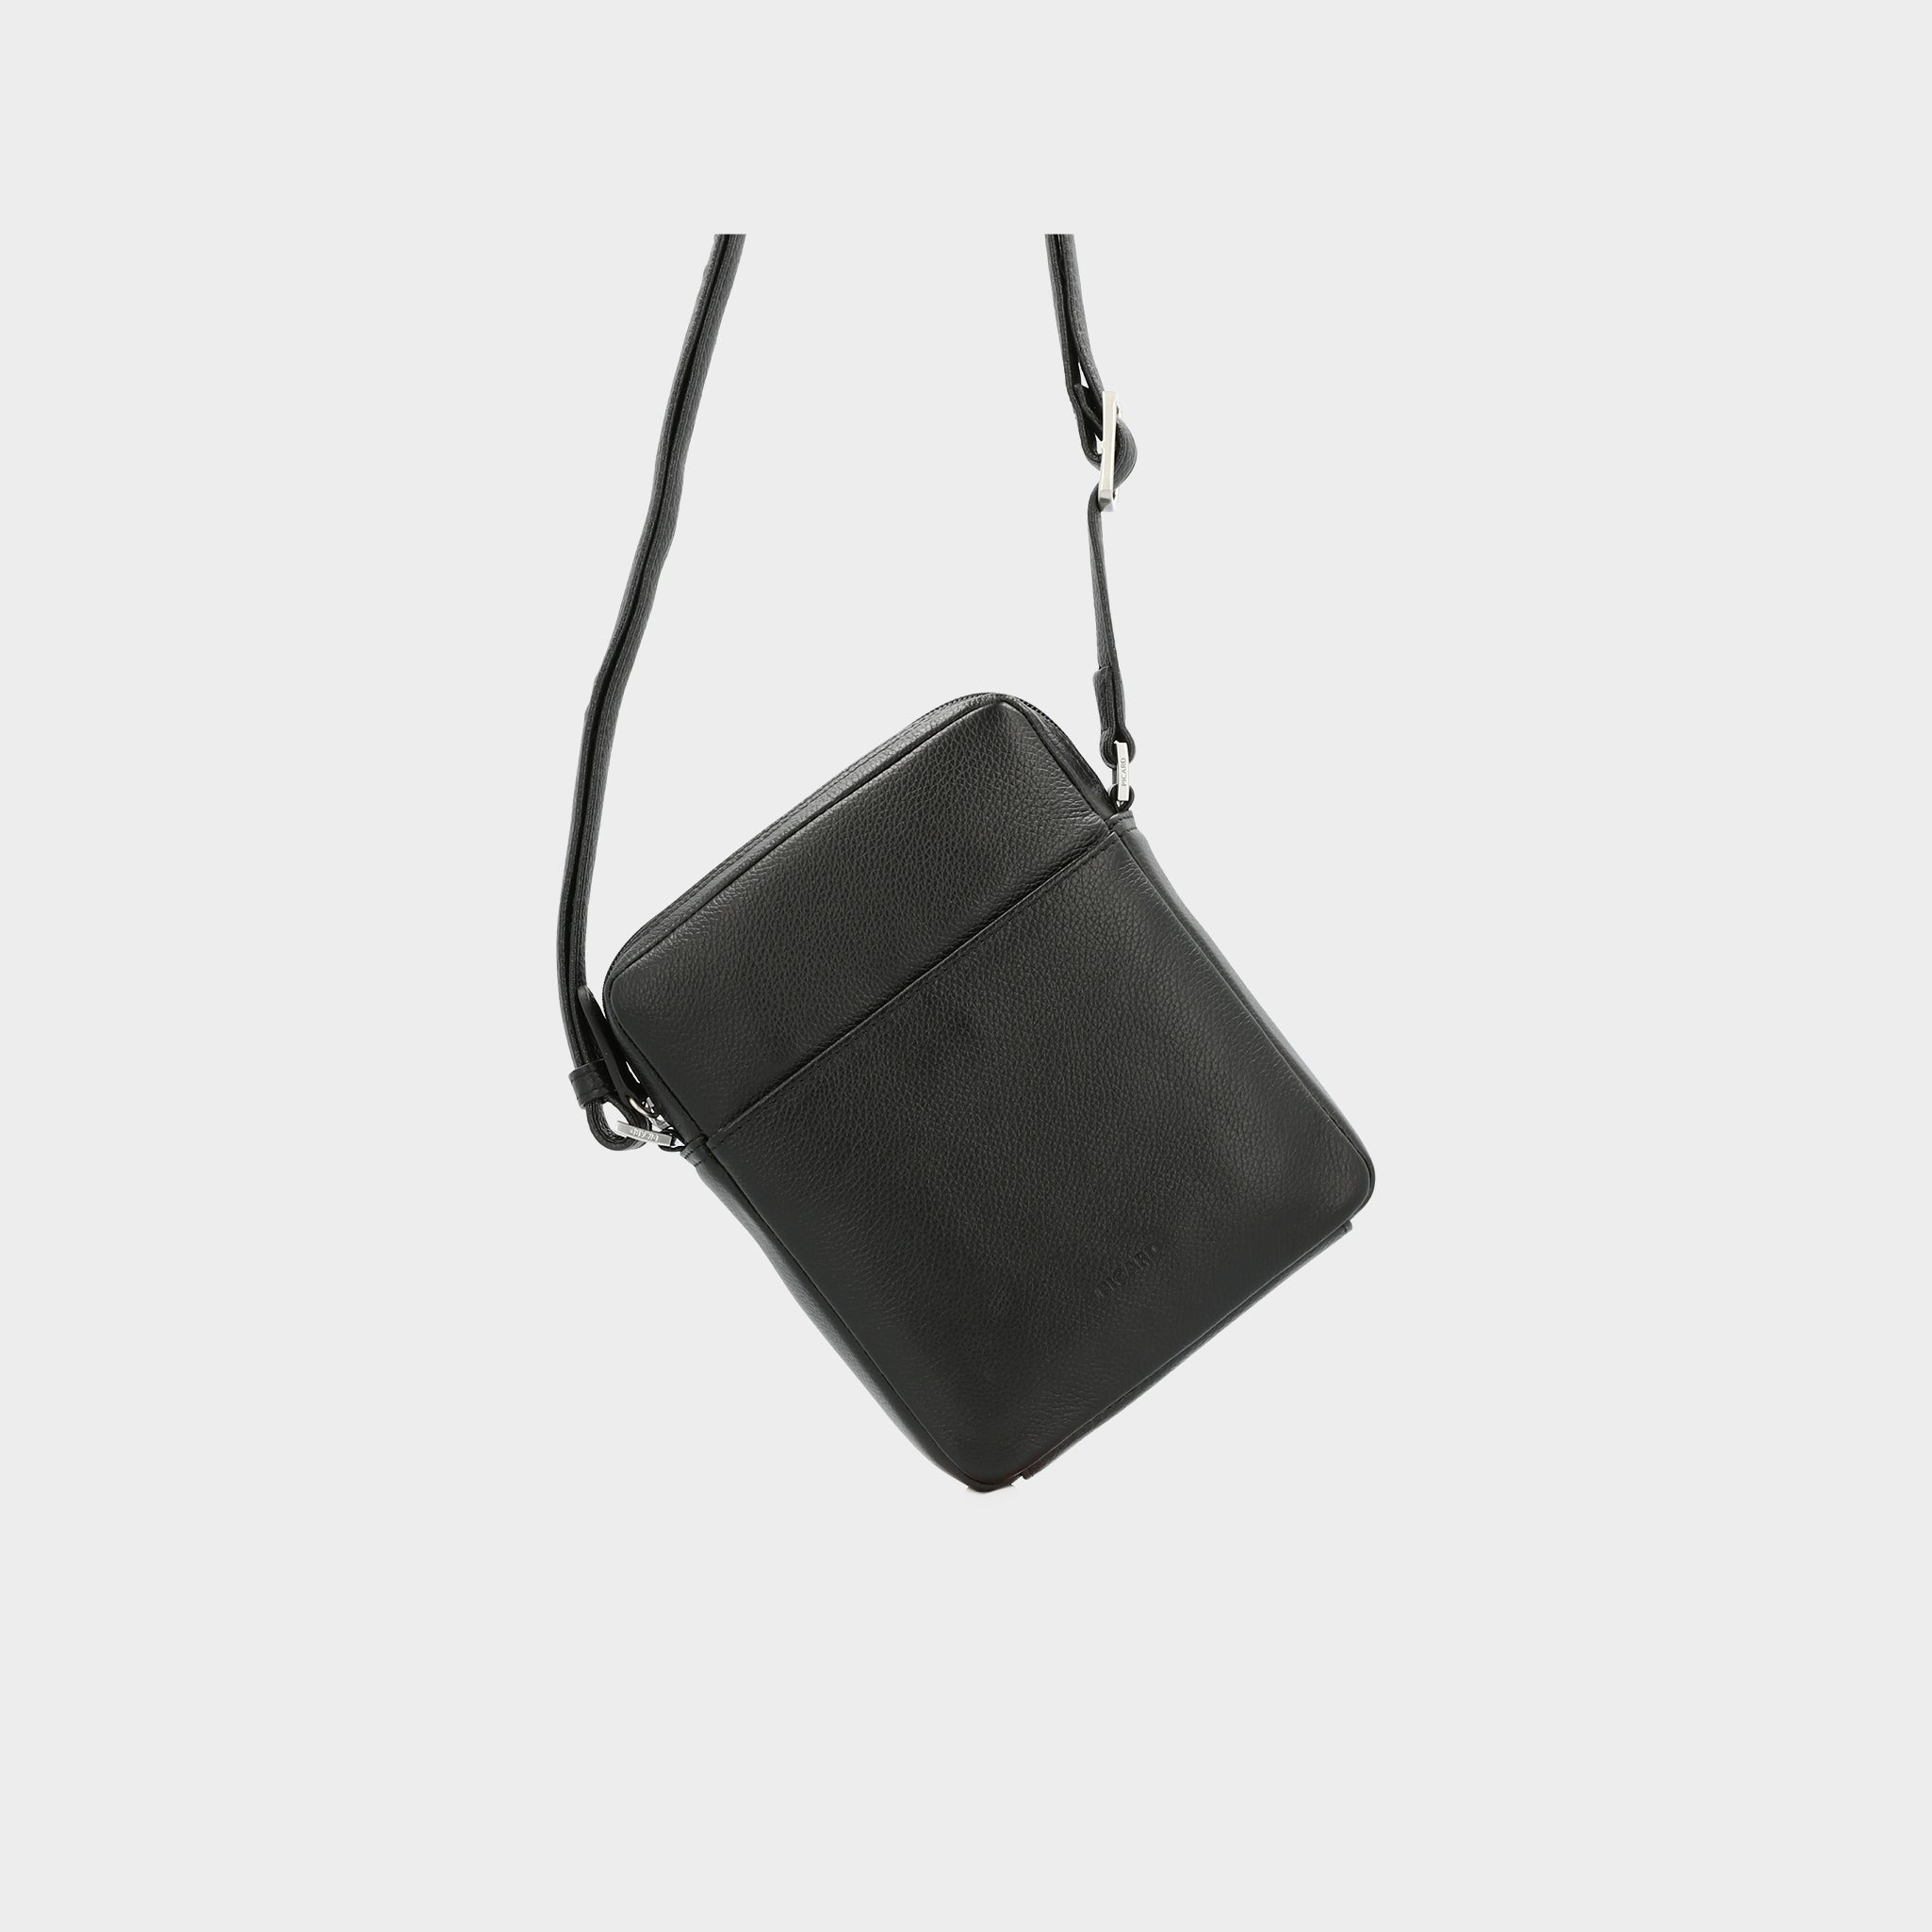 Picard, Bags, Picard Black Leather Crossbody Handbag